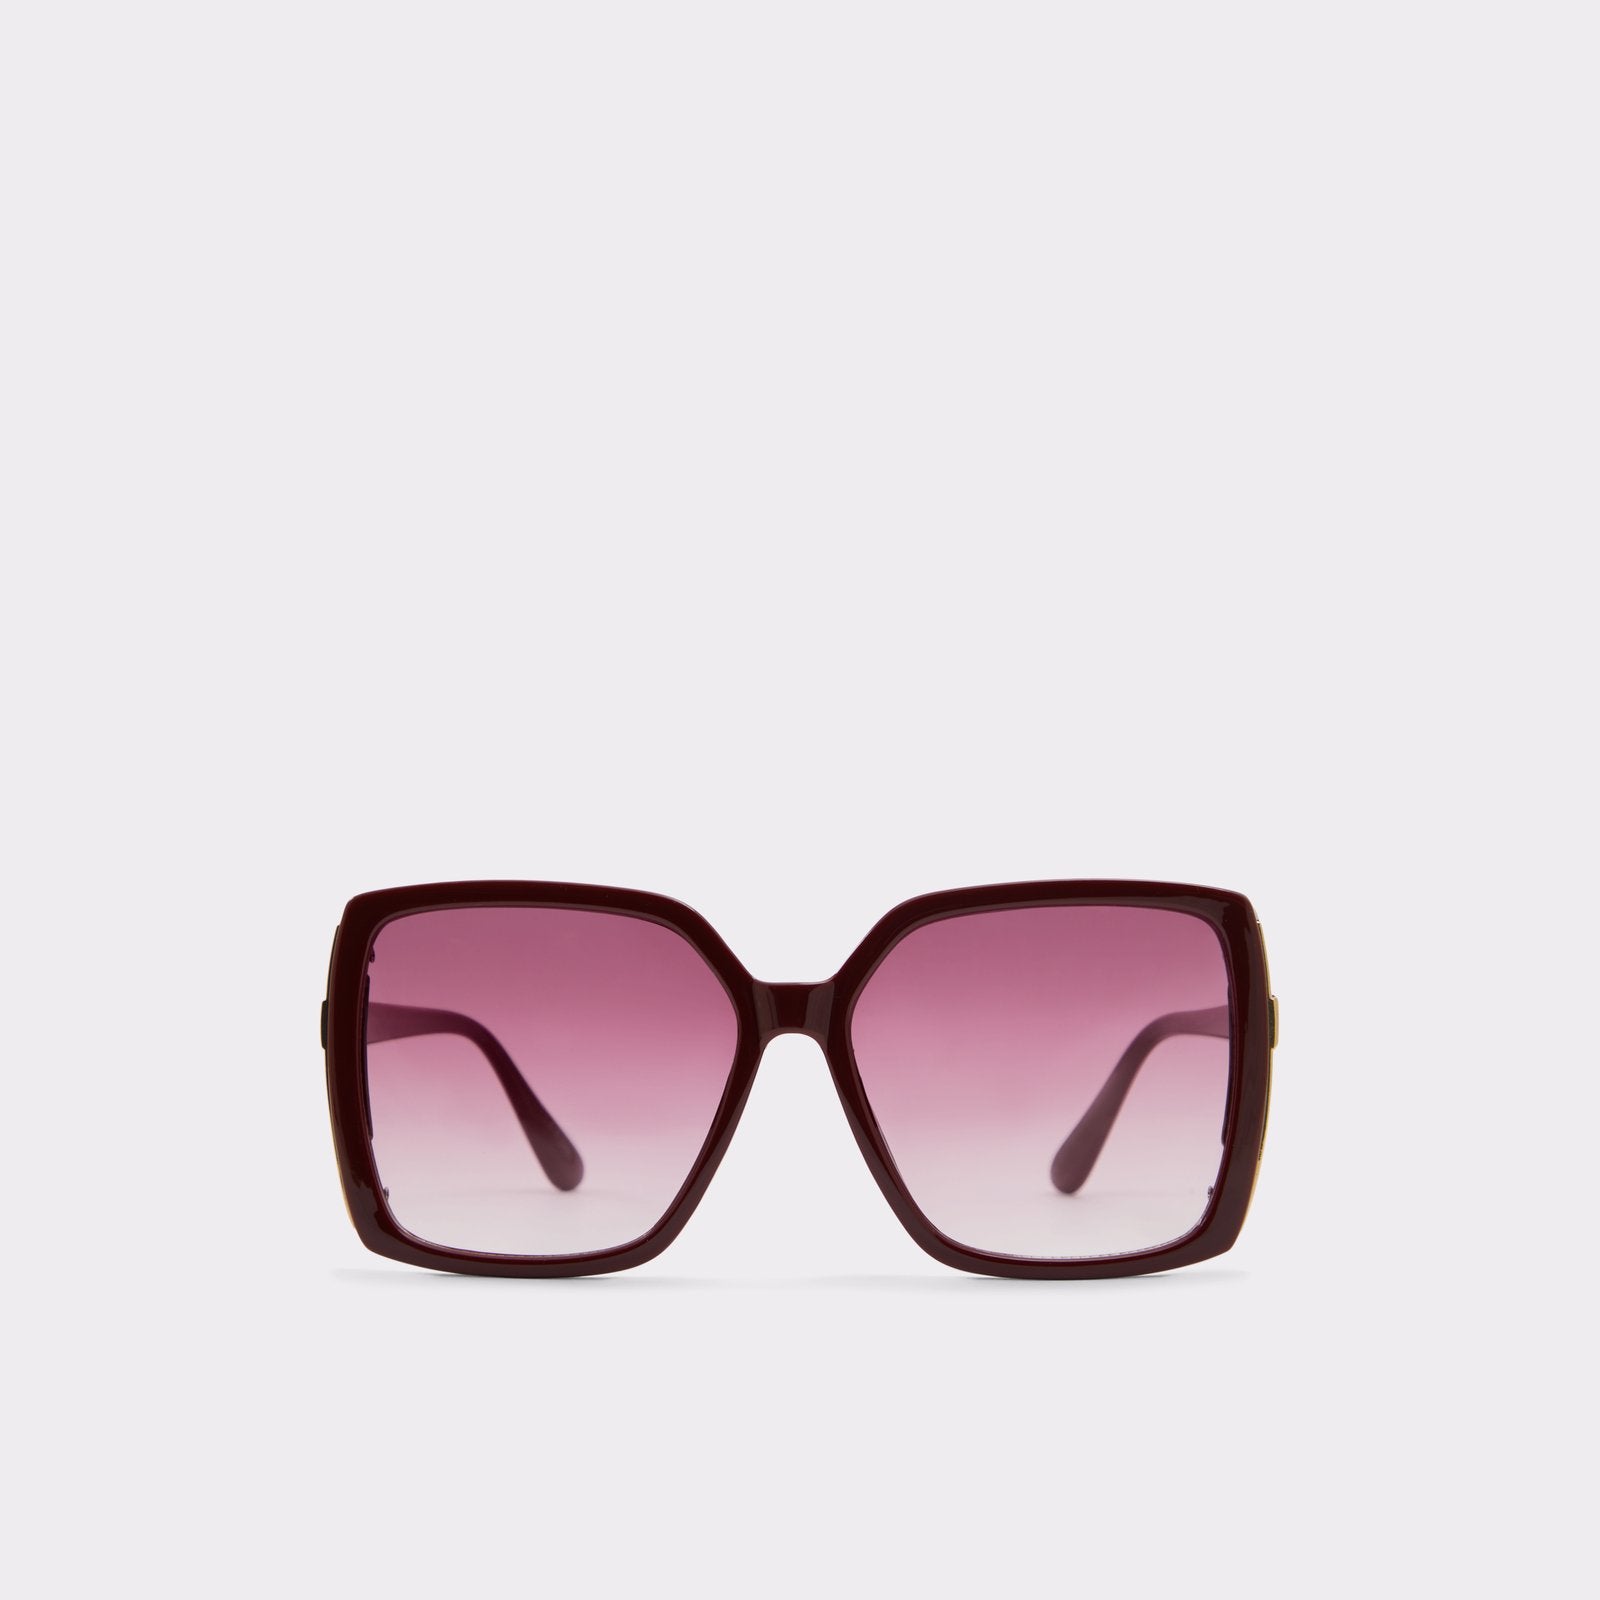 Aldo Women’s Sunglasses Khyle (Bordo)